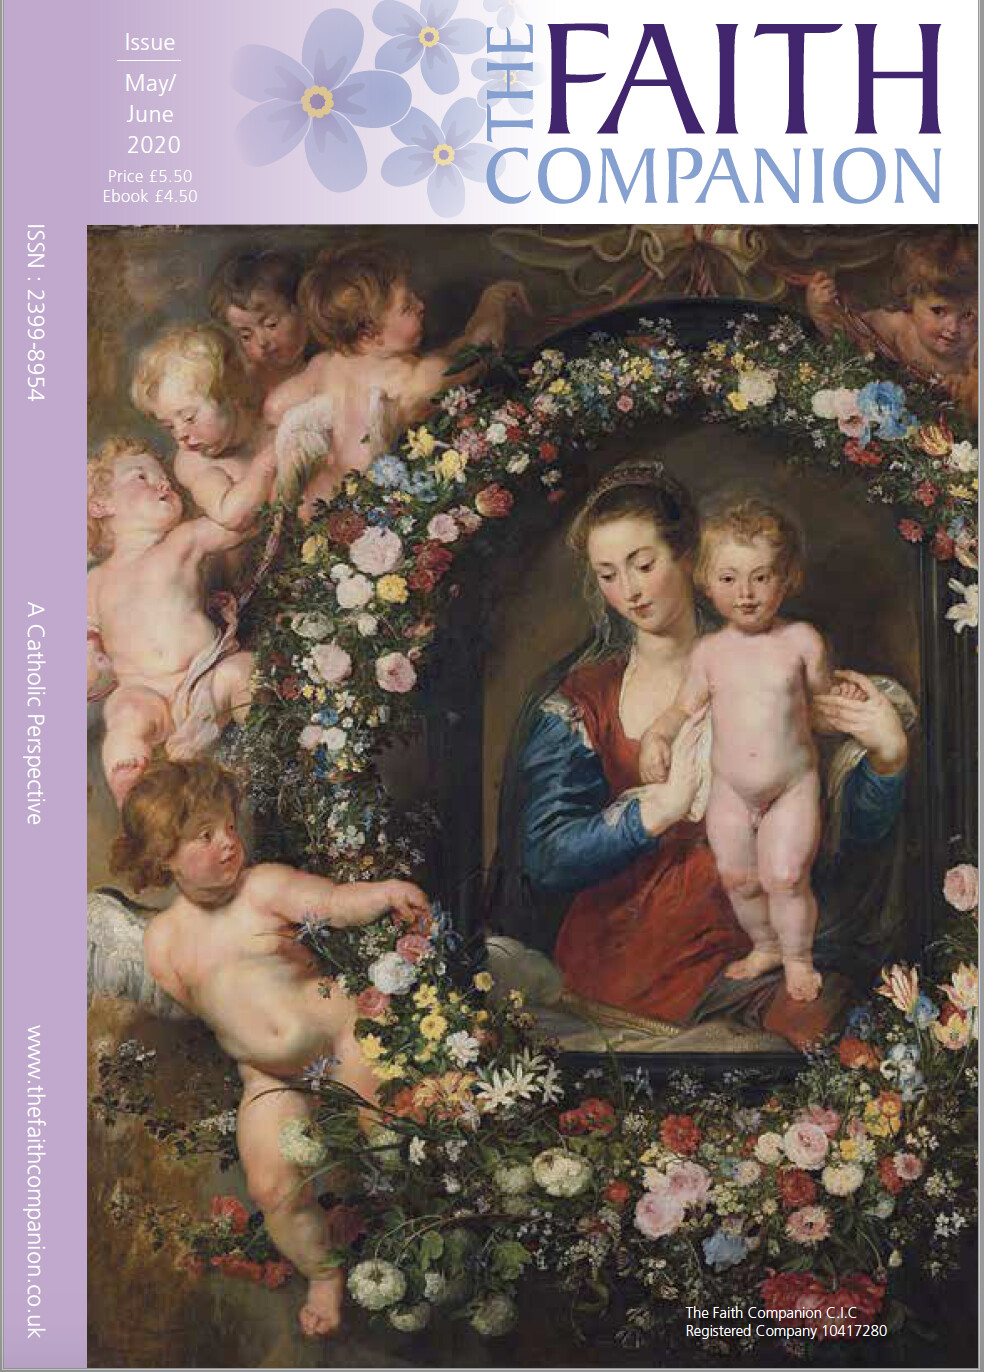 e-copy - The Faith Companion -May - Jun 2020 Edition